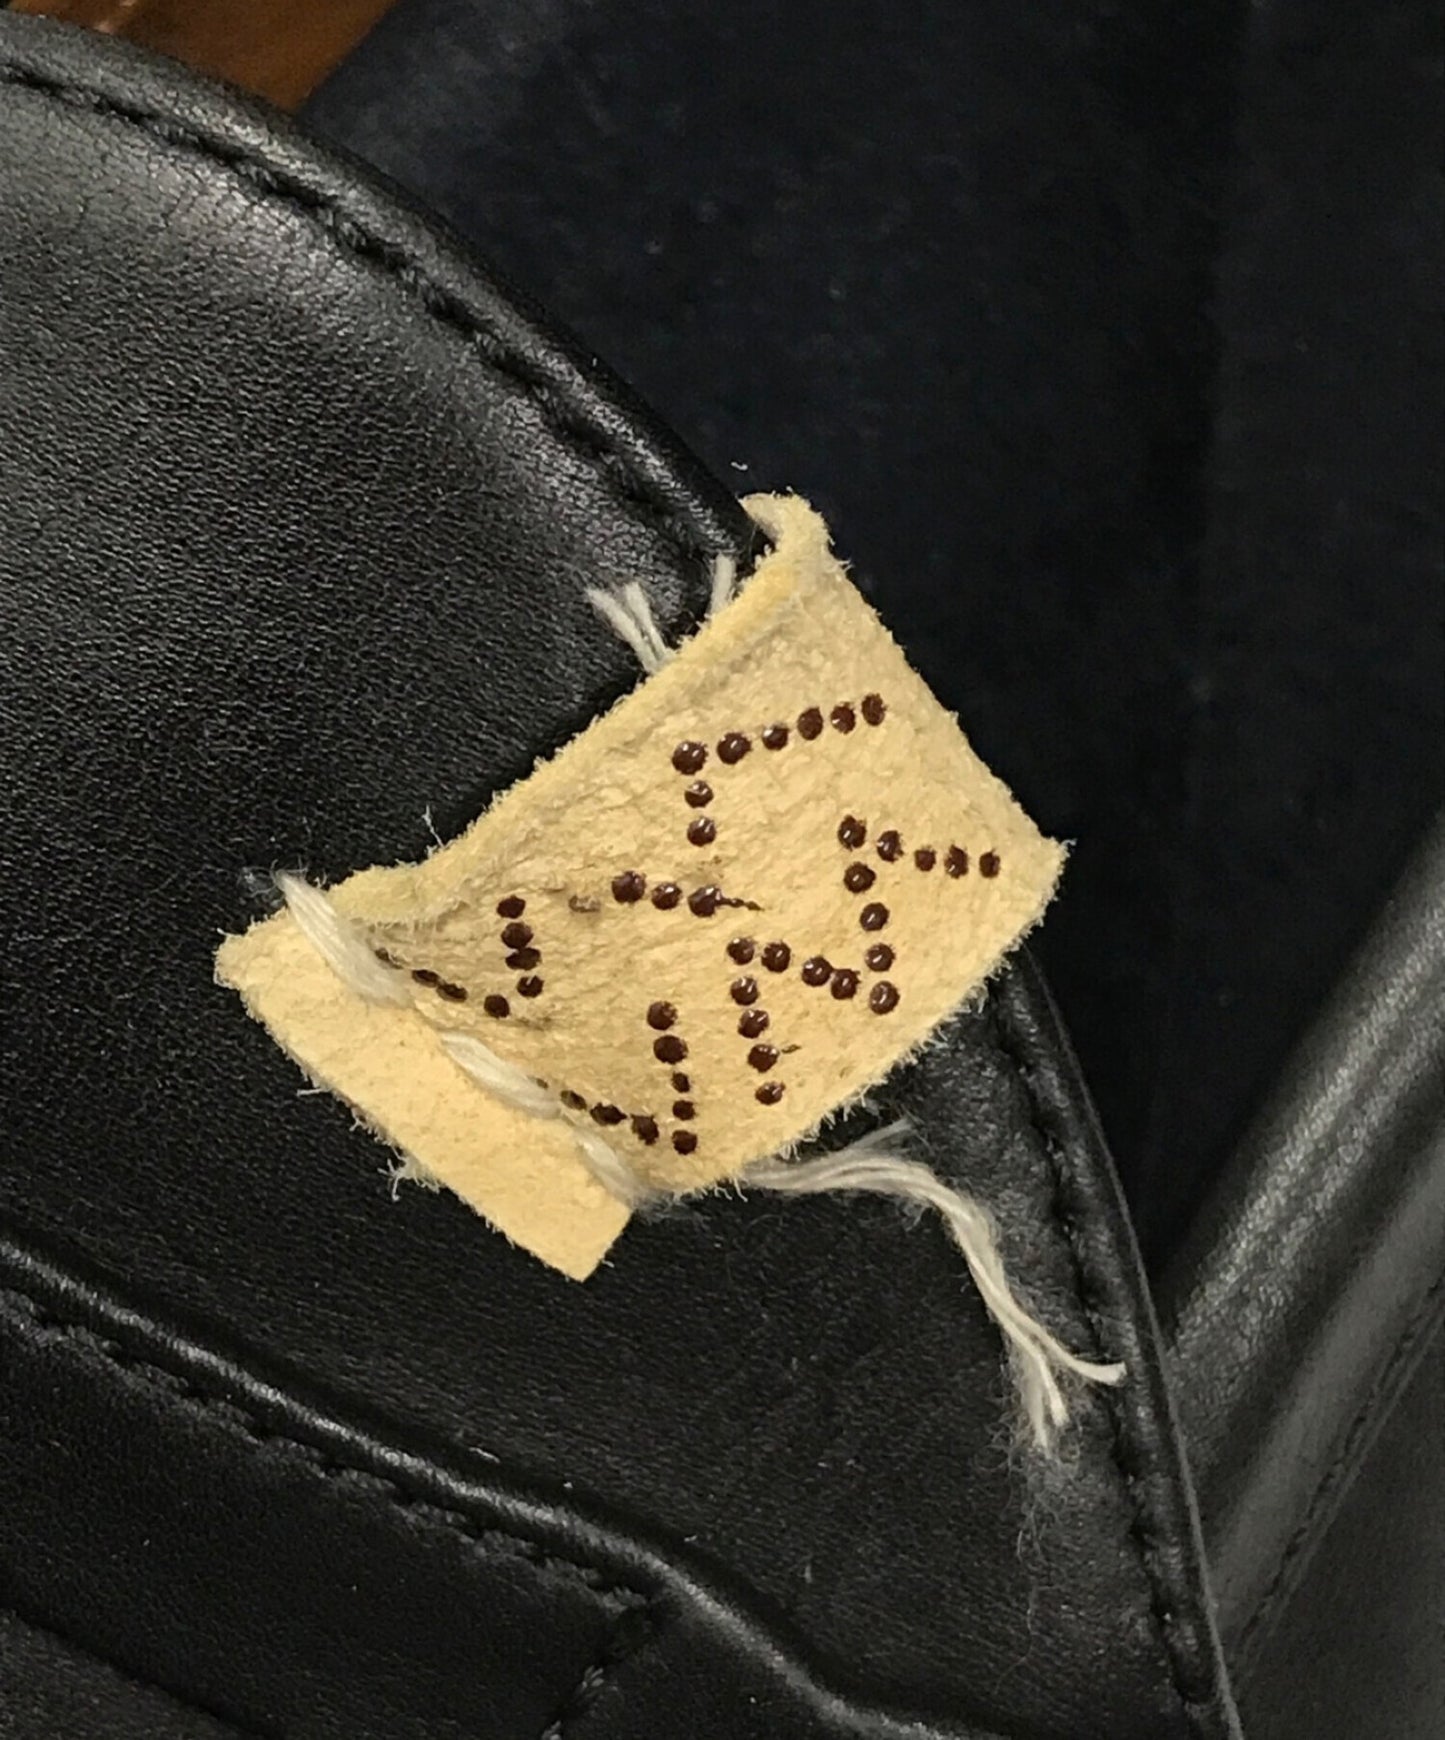 [Pre-owned] VISVIM coin loafer